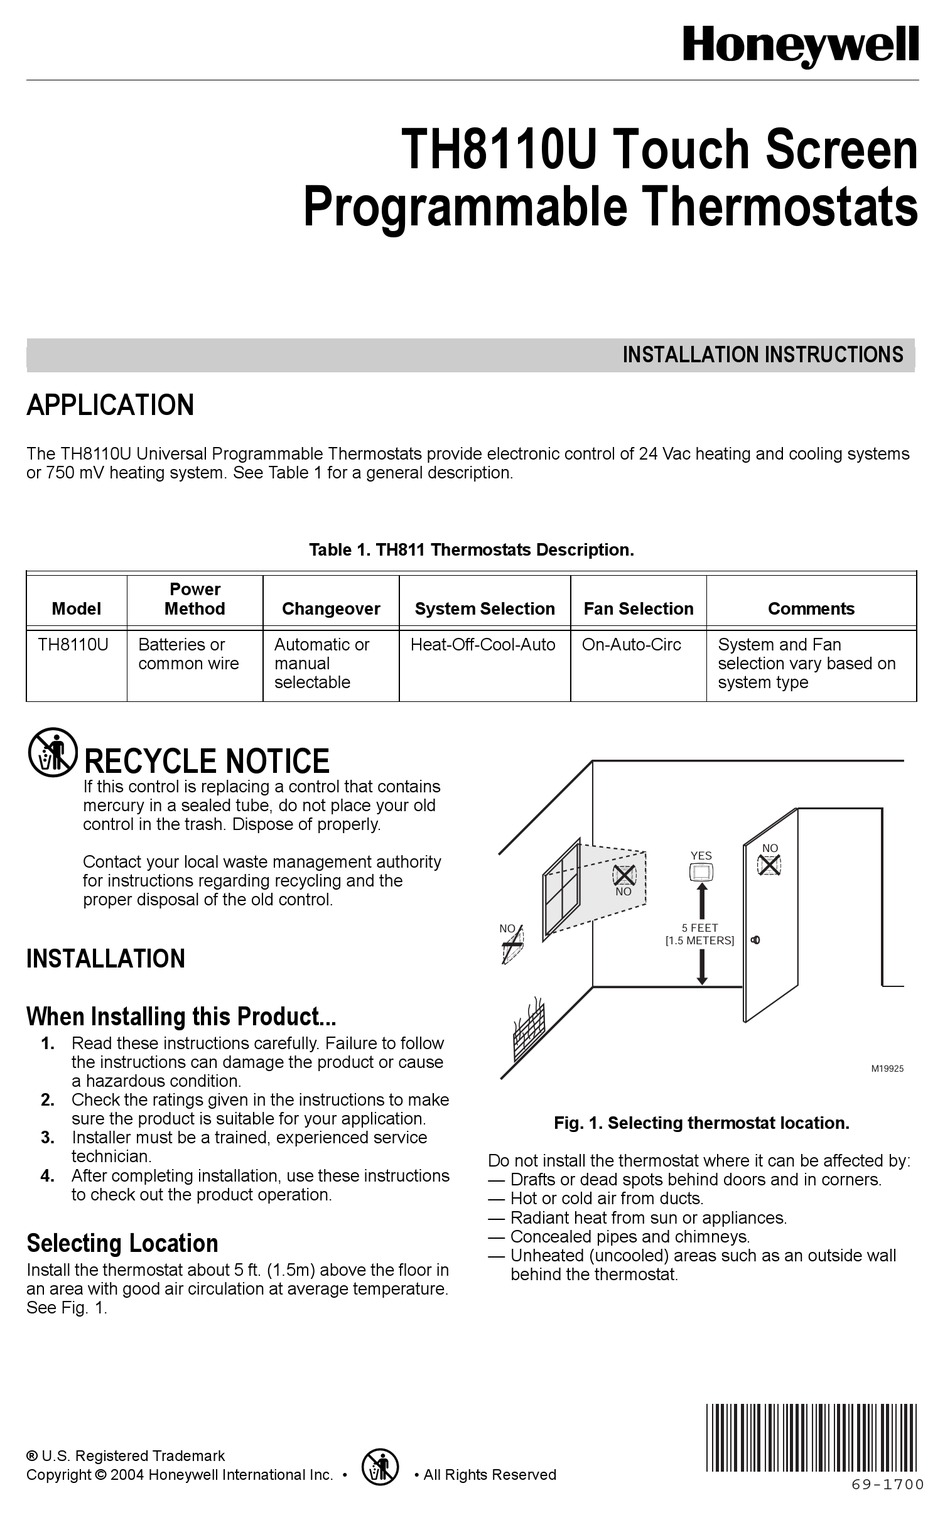 helicon focus manual pdf